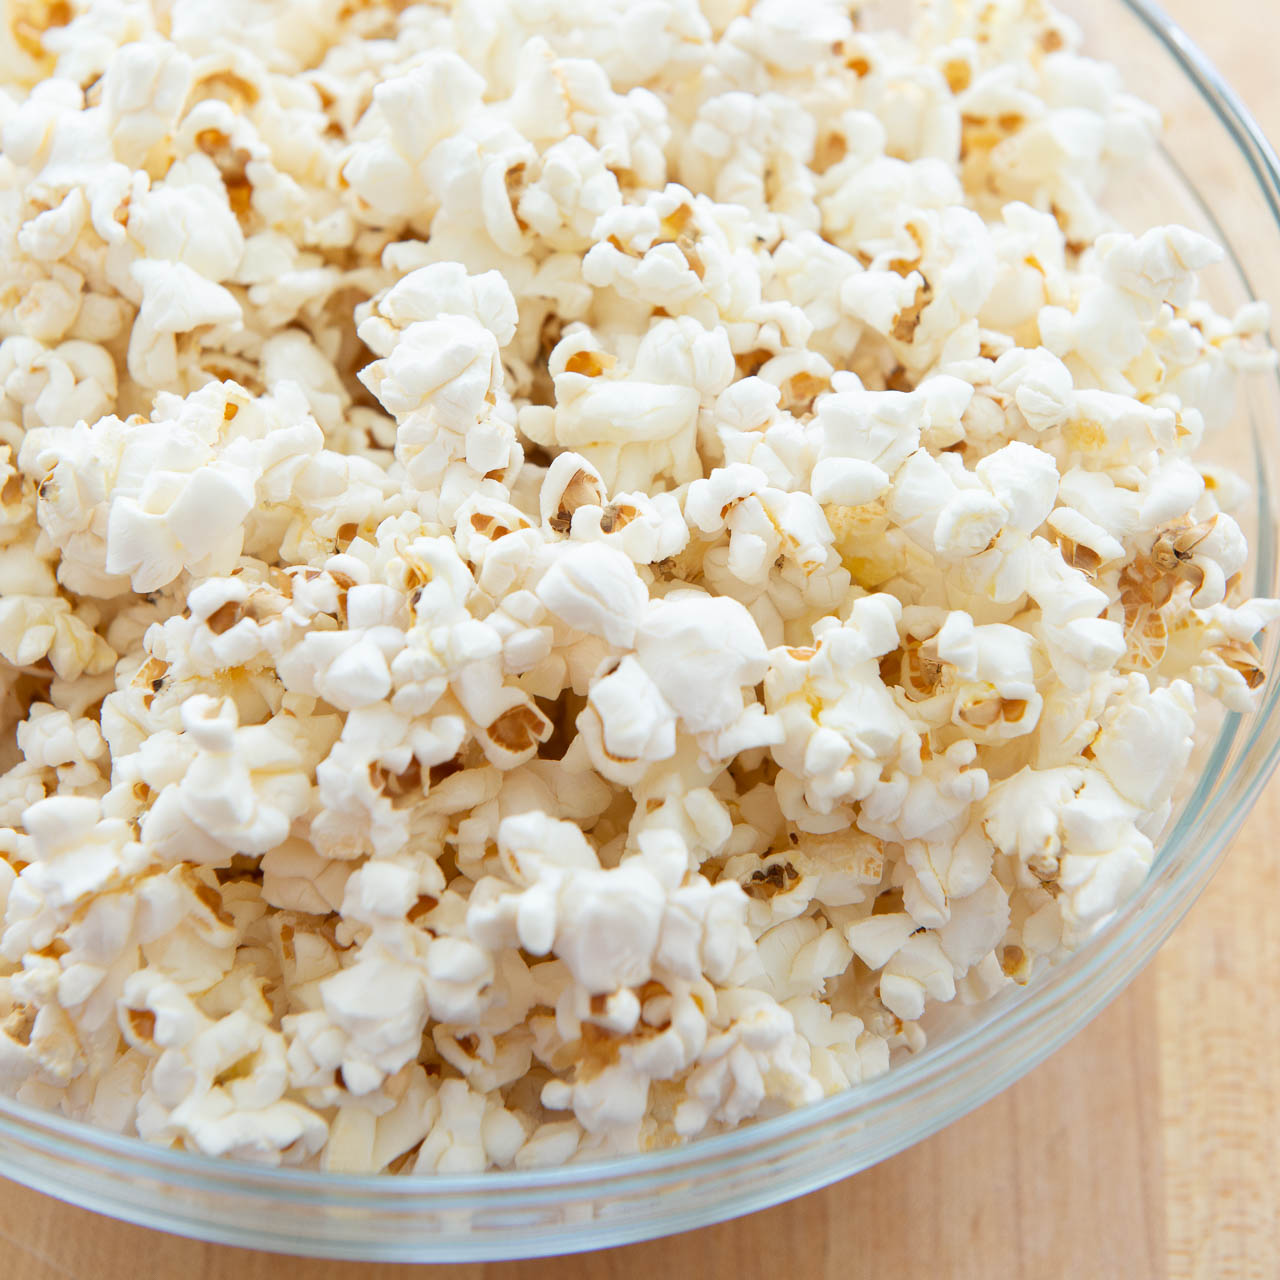 https://www.fifteenspatulas.com/wp-content/uploads/2013/03/How-to-Make-Popcorn-on-the-Stove-10.jpg